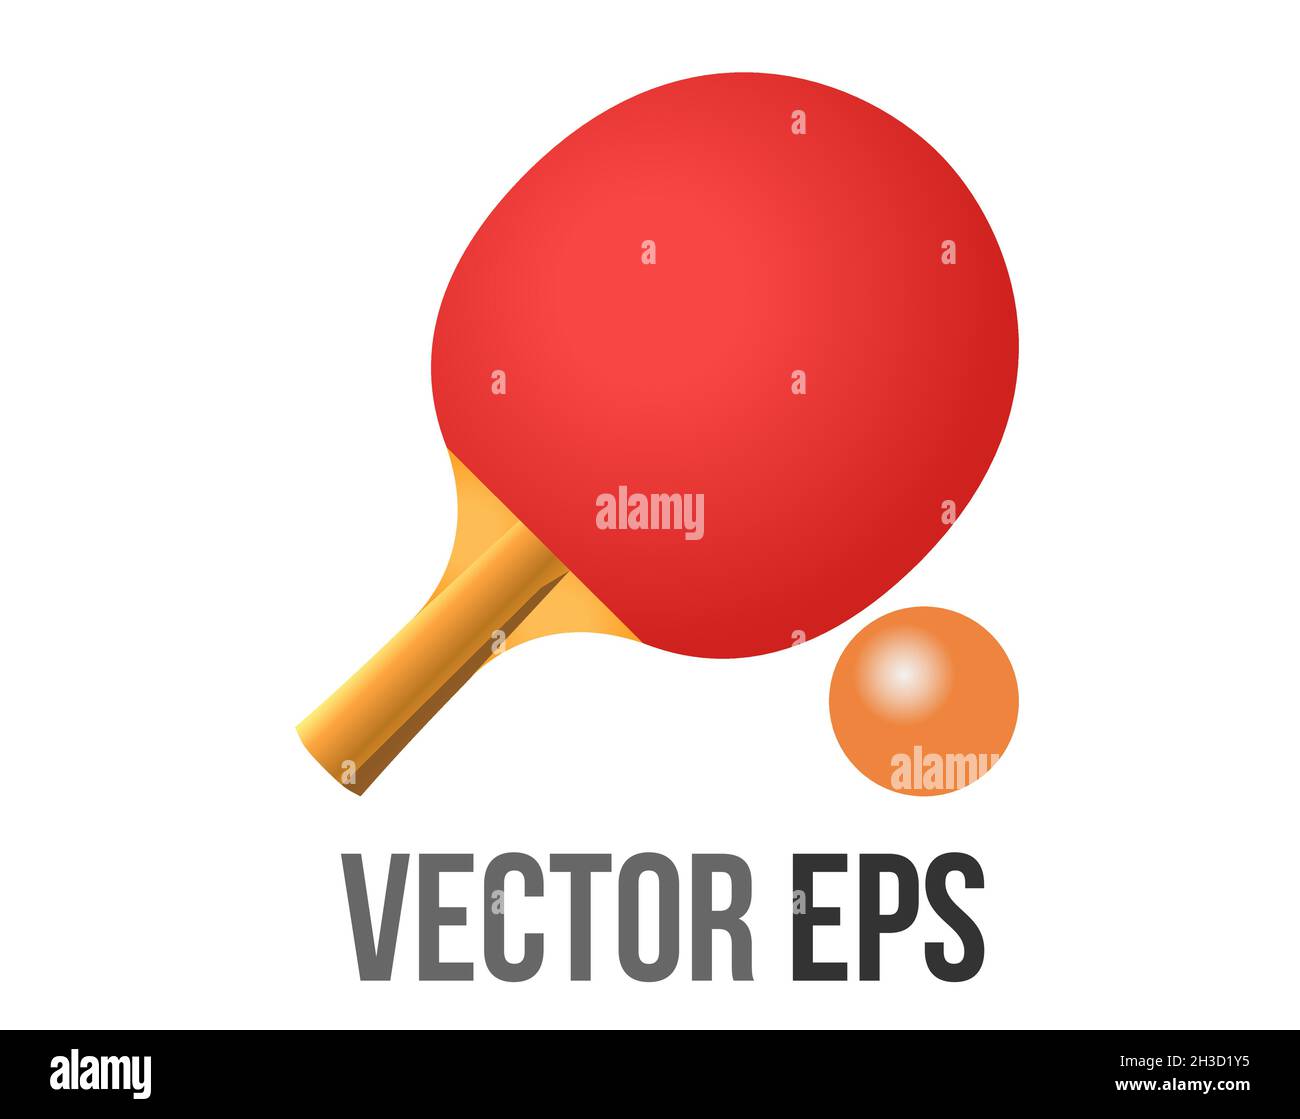 Ping pong game Royalty Free Vector Image - VectorStock